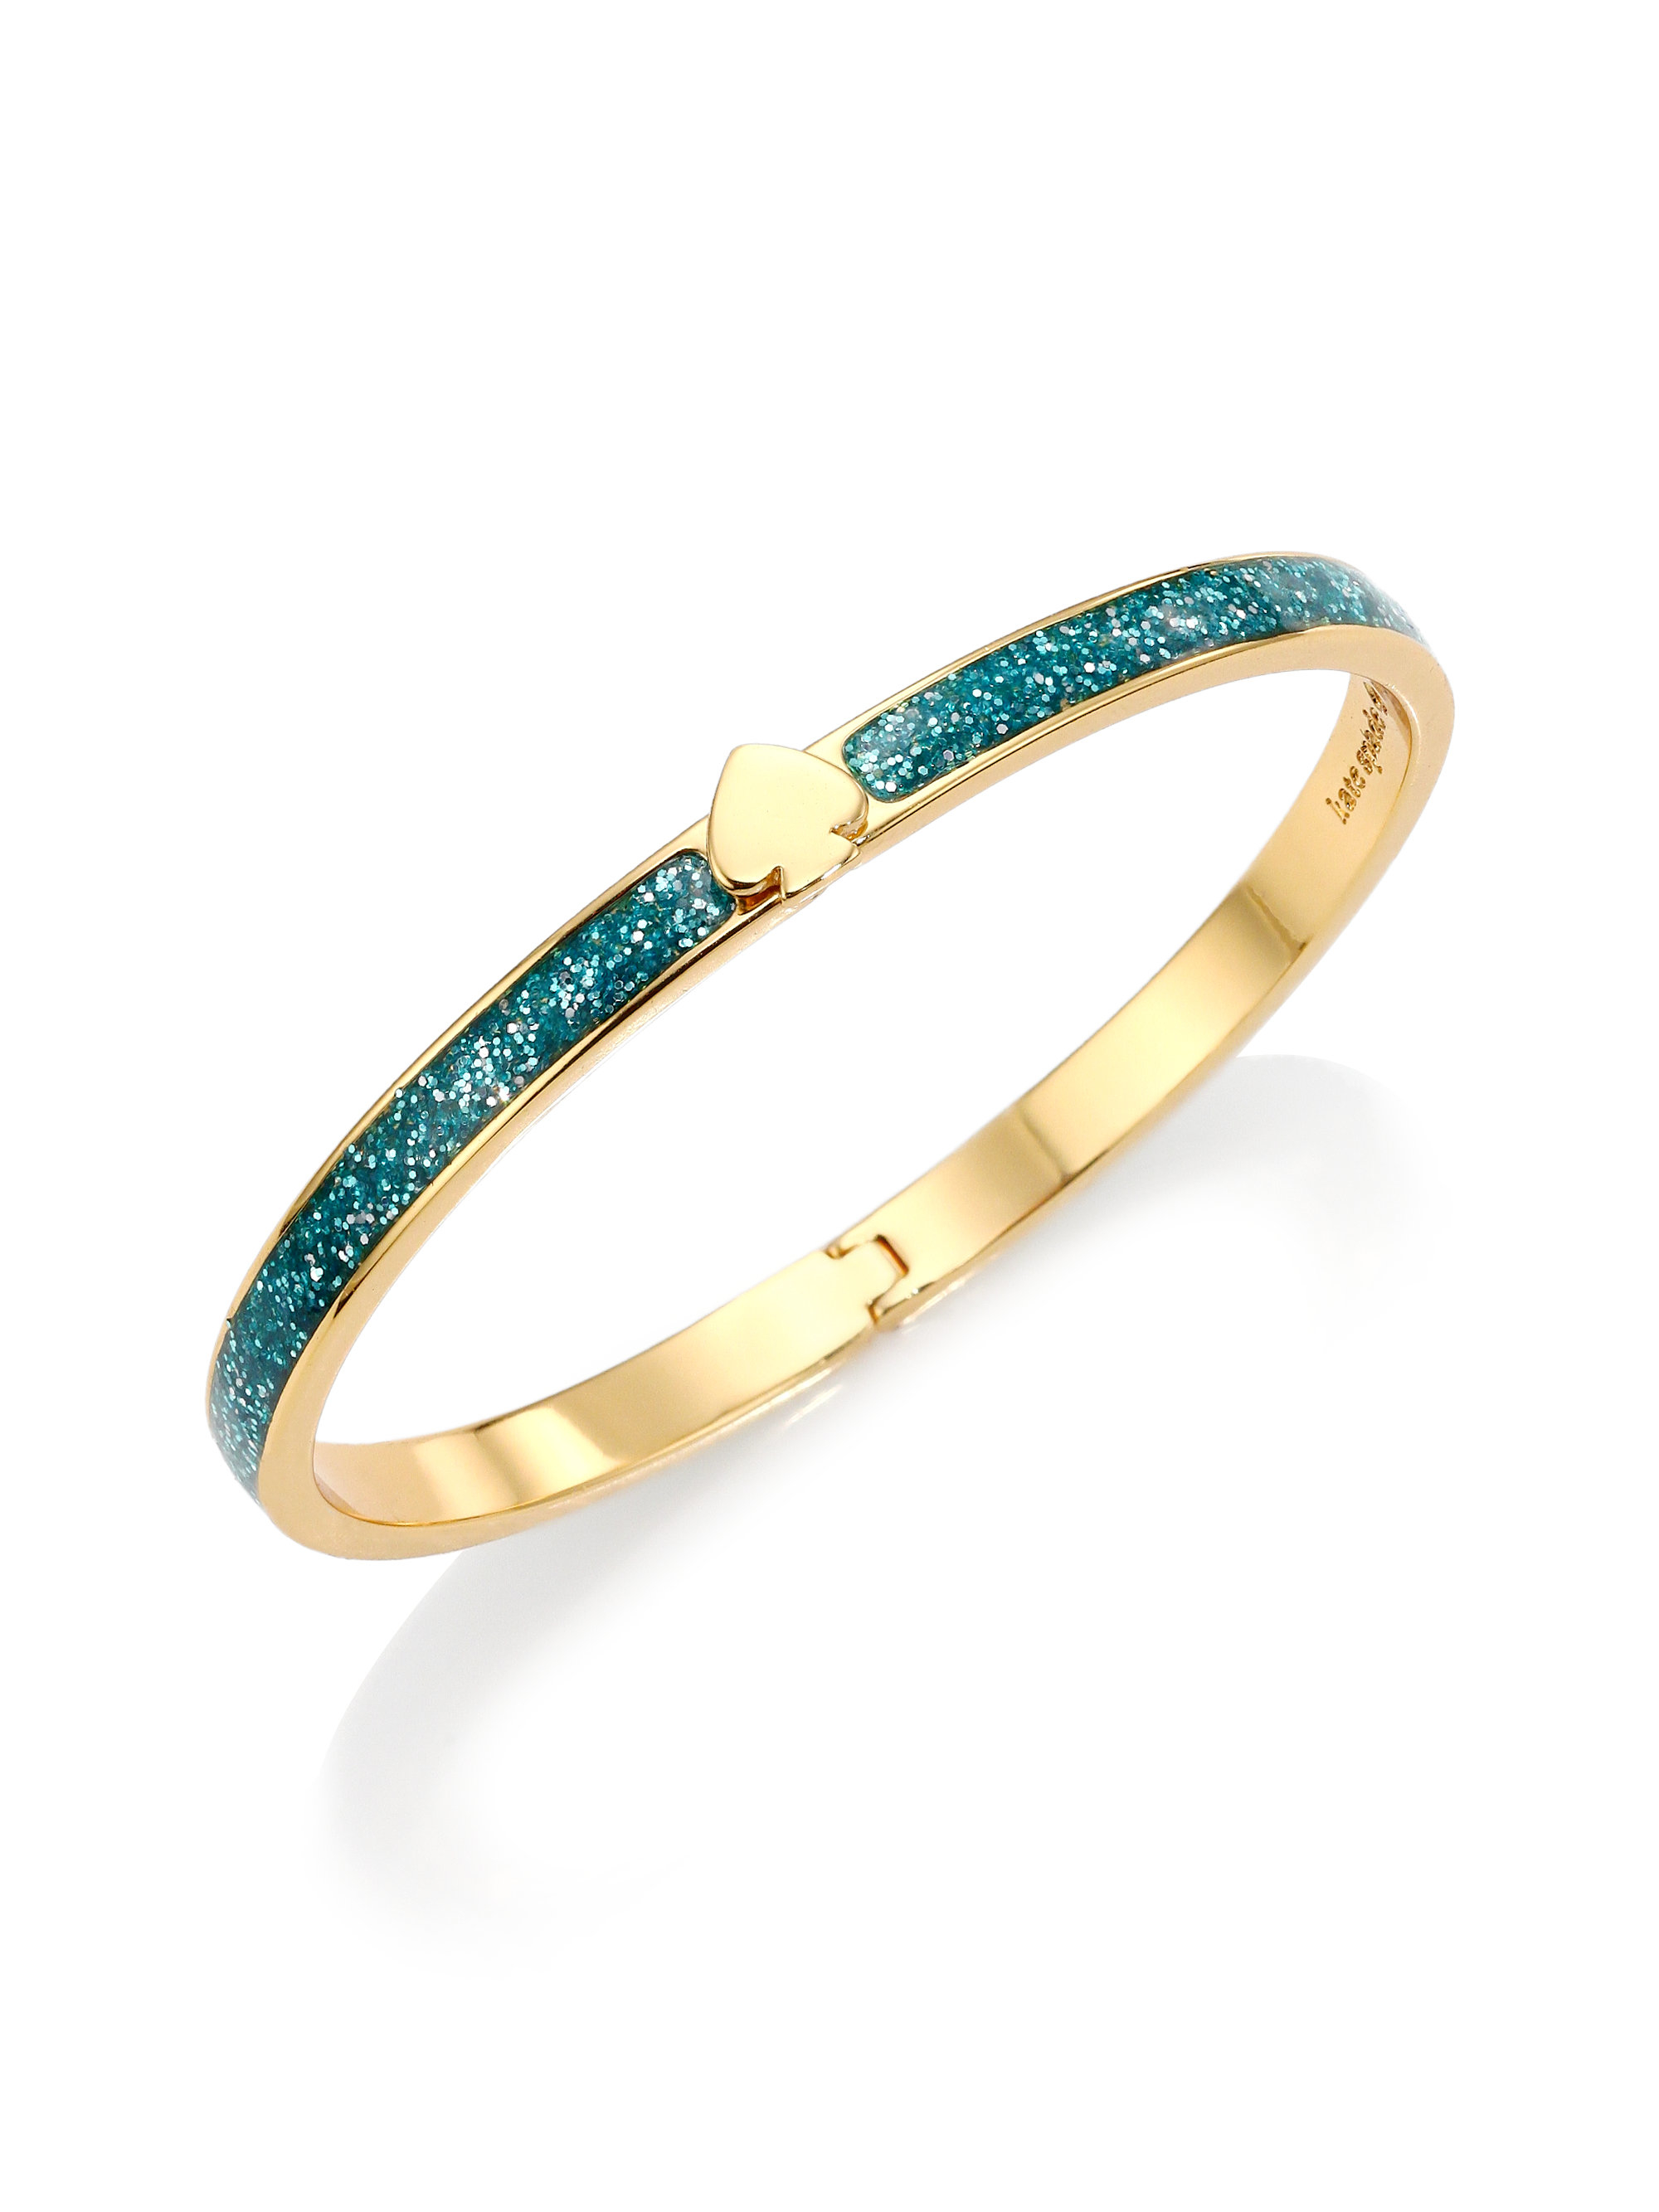 Kate Spade New York Gold Turquoise Spade Glitter Enamel Bangle Braceletblue Gold Product 0 767710298 Normal 